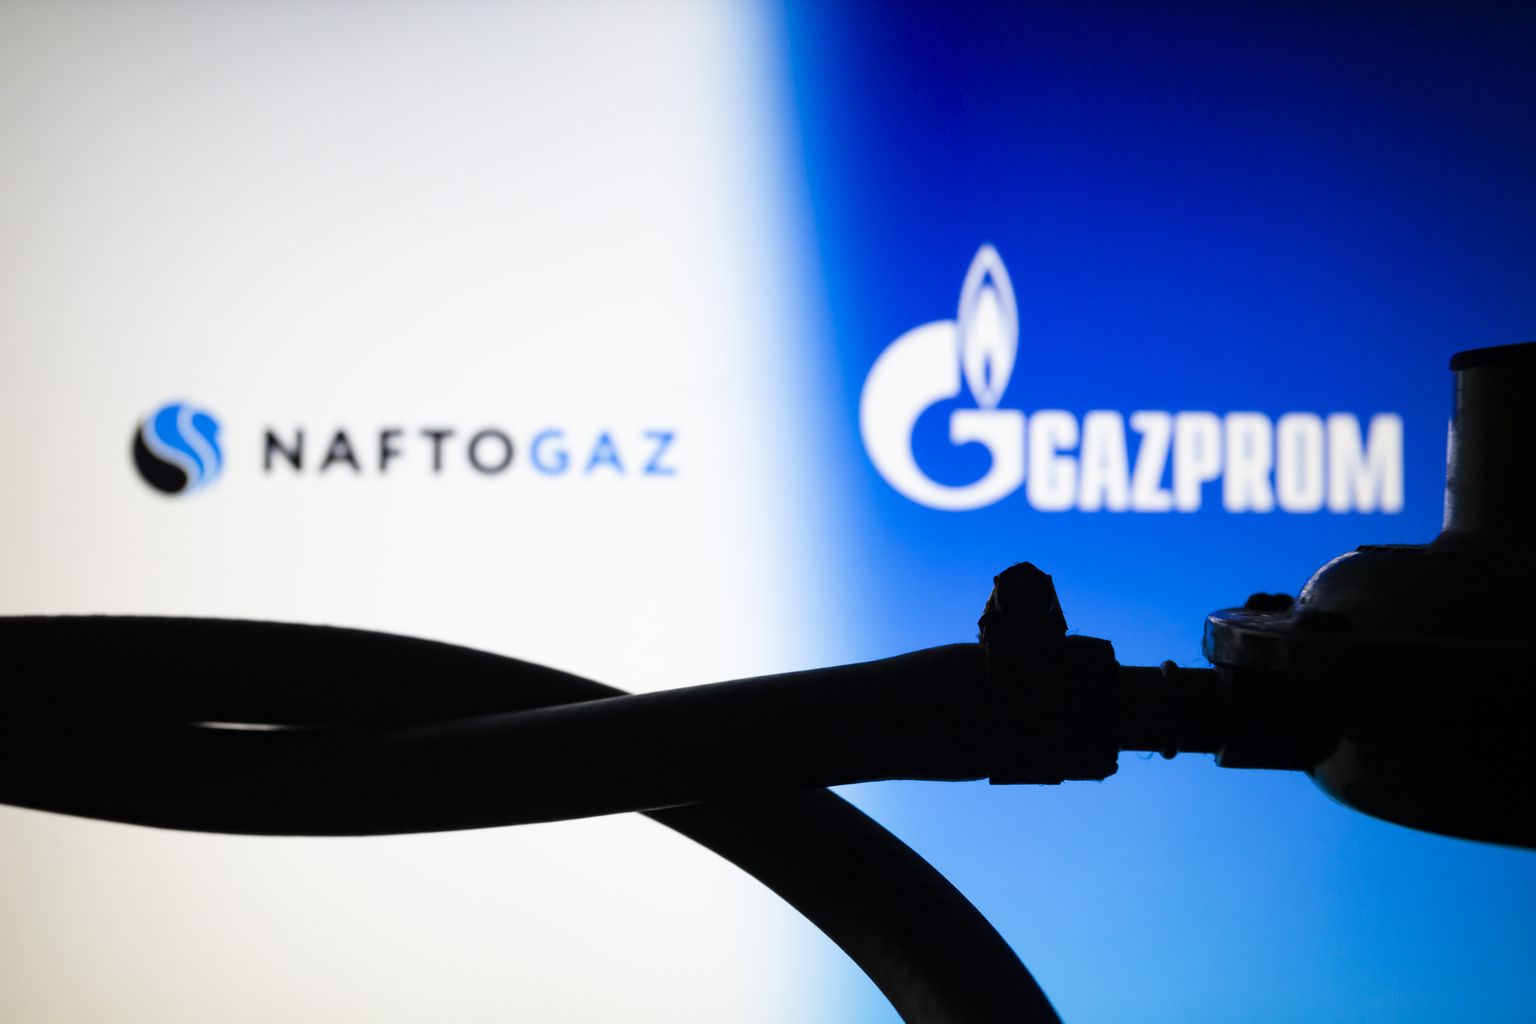 Naftogazi ja Gazpromi logod.